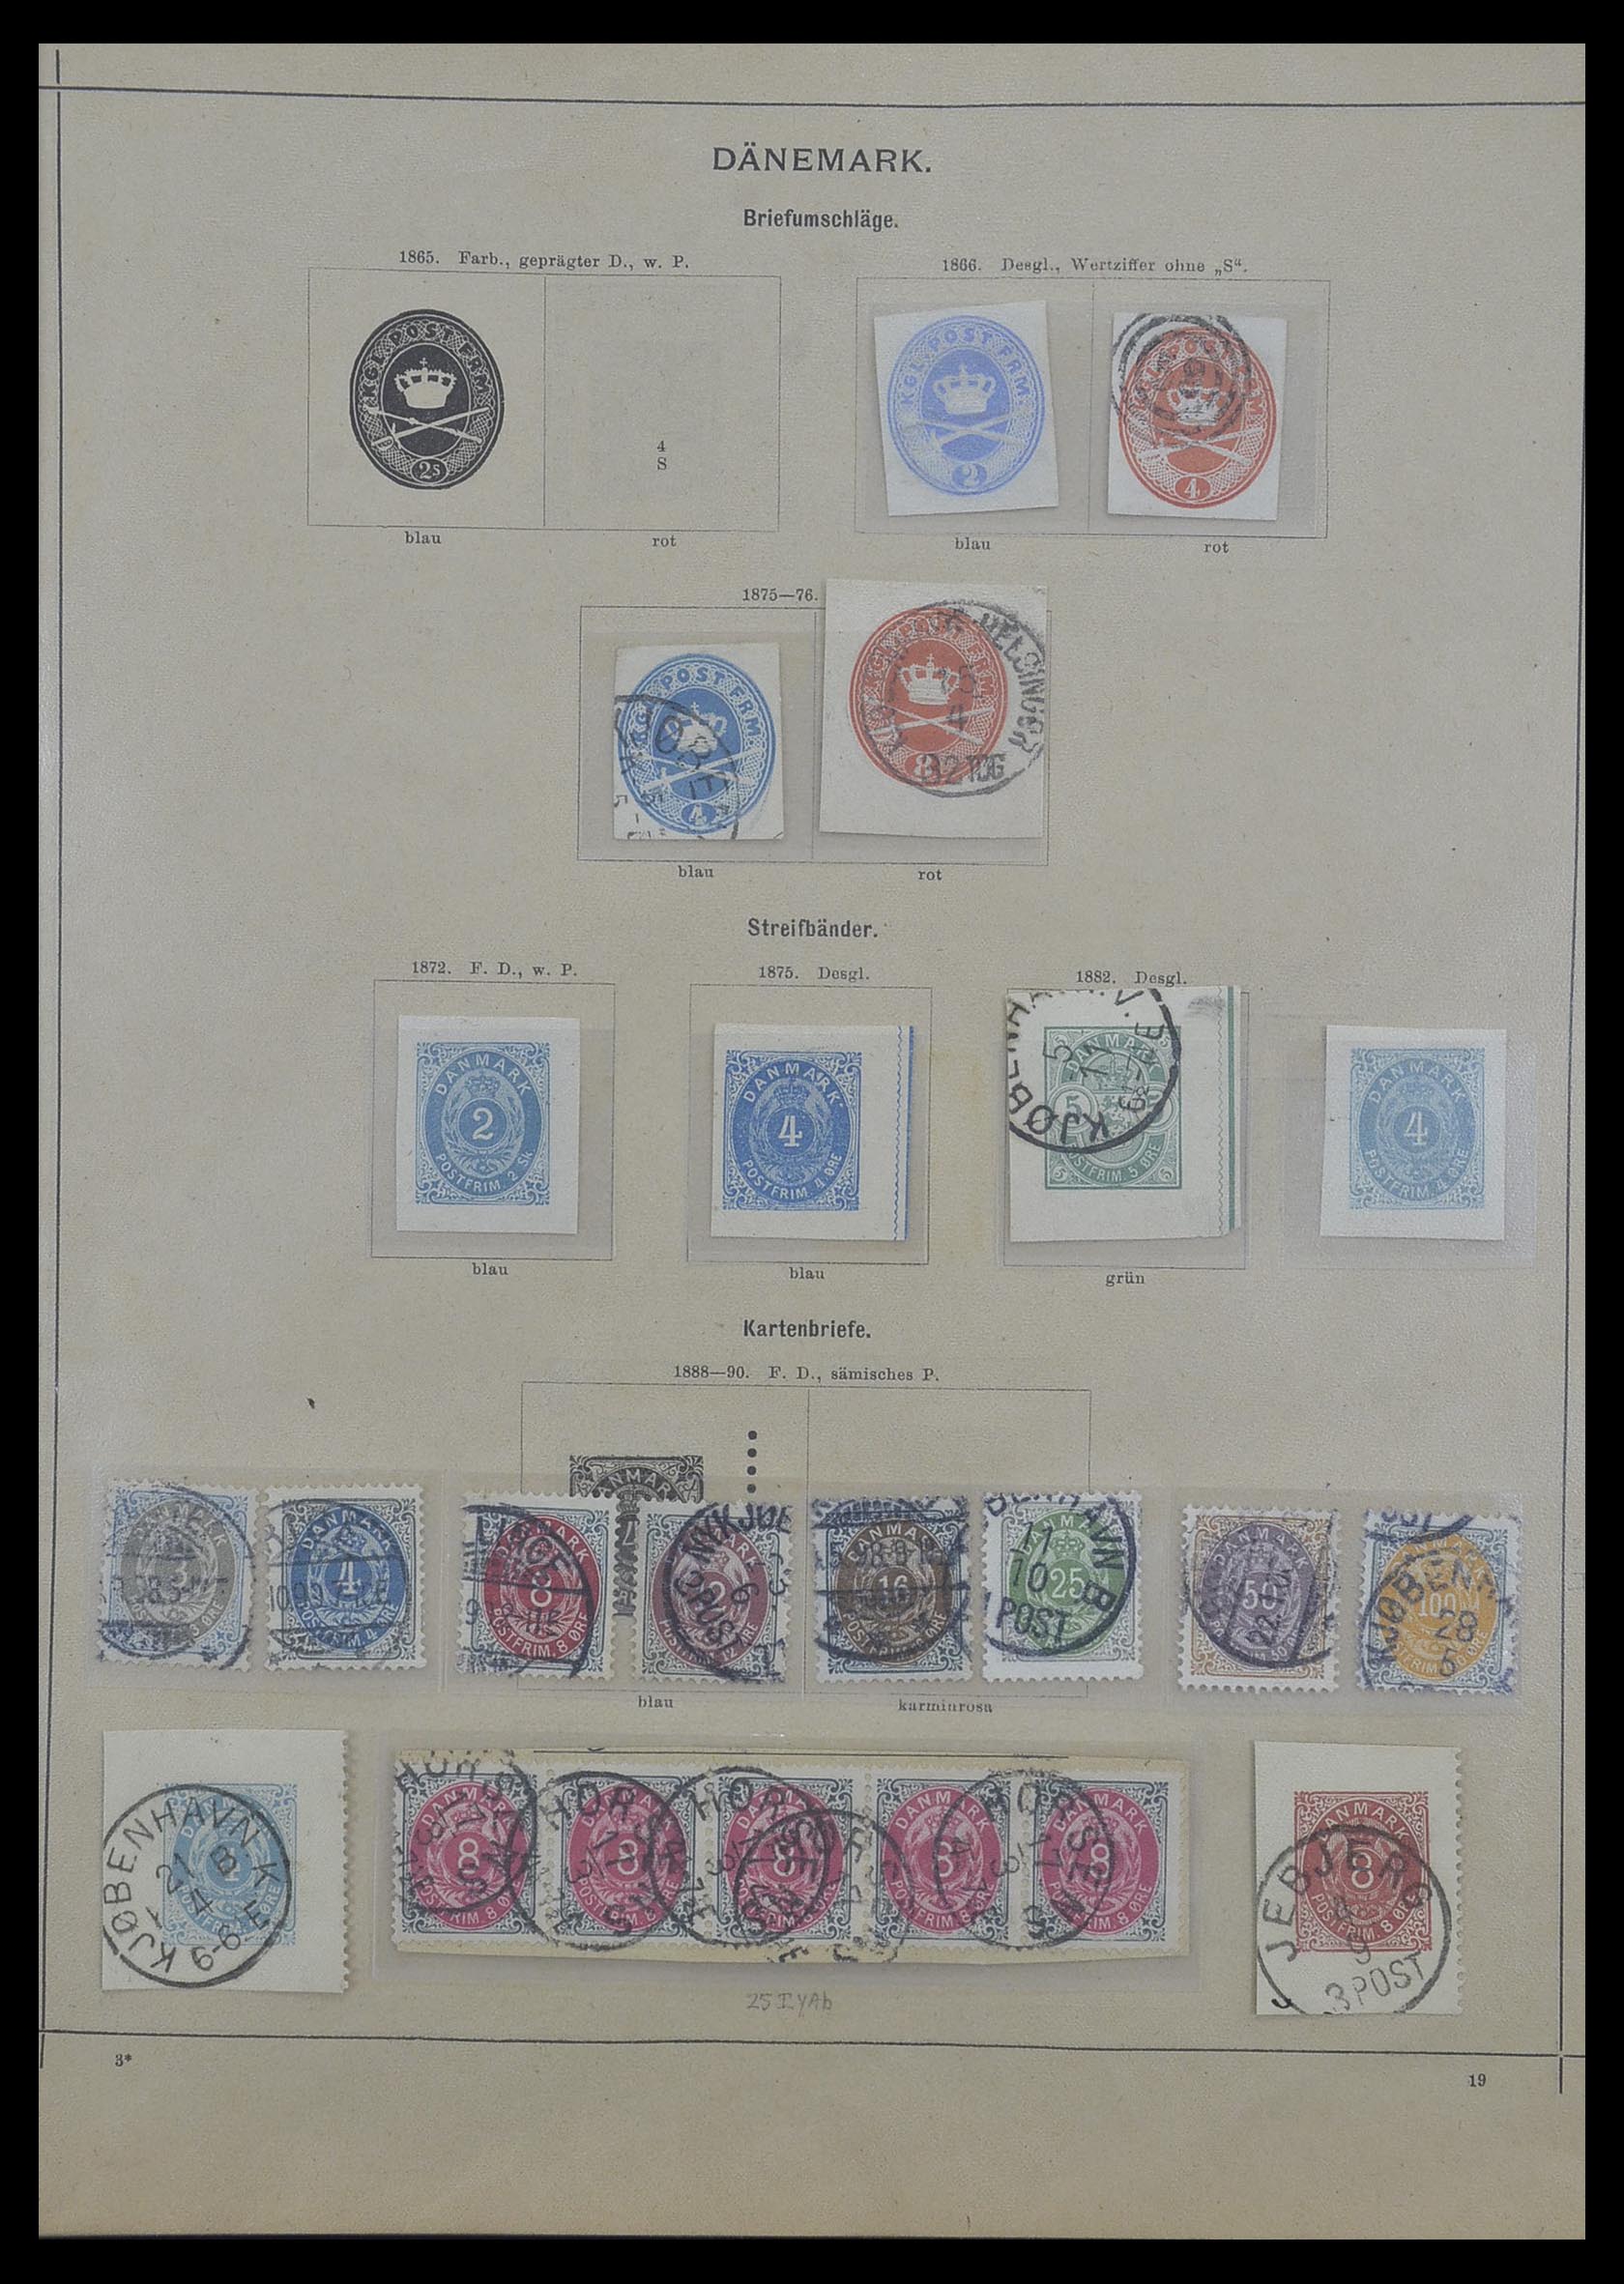 33628 002 - Stamp collection 33628 Scandinavia 1851-1900.